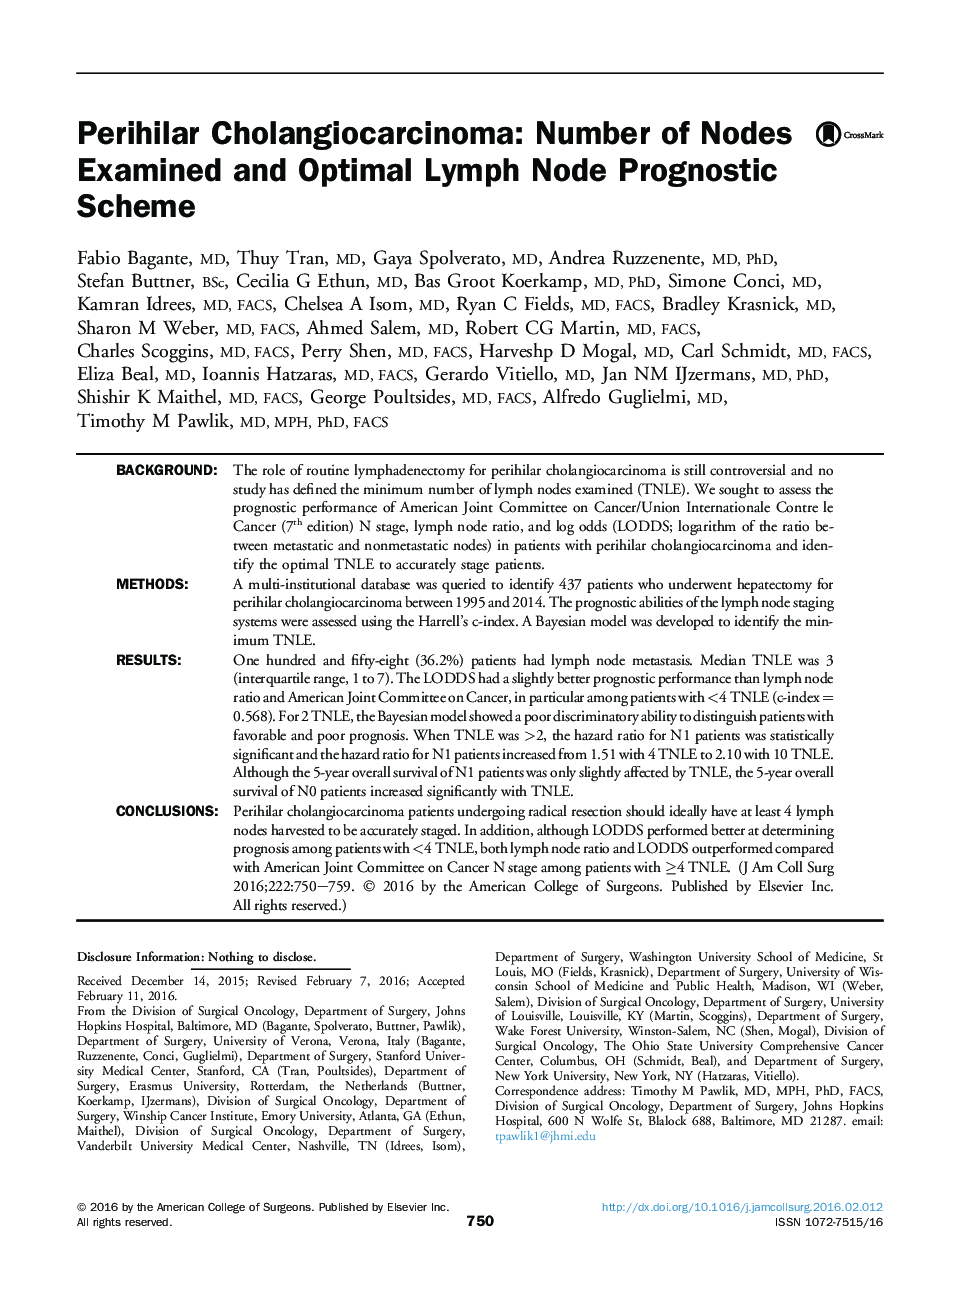 Perihilar Cholangiocarcinoma: Number of Nodes Examined and Optimal Lymph Node Prognostic Scheme